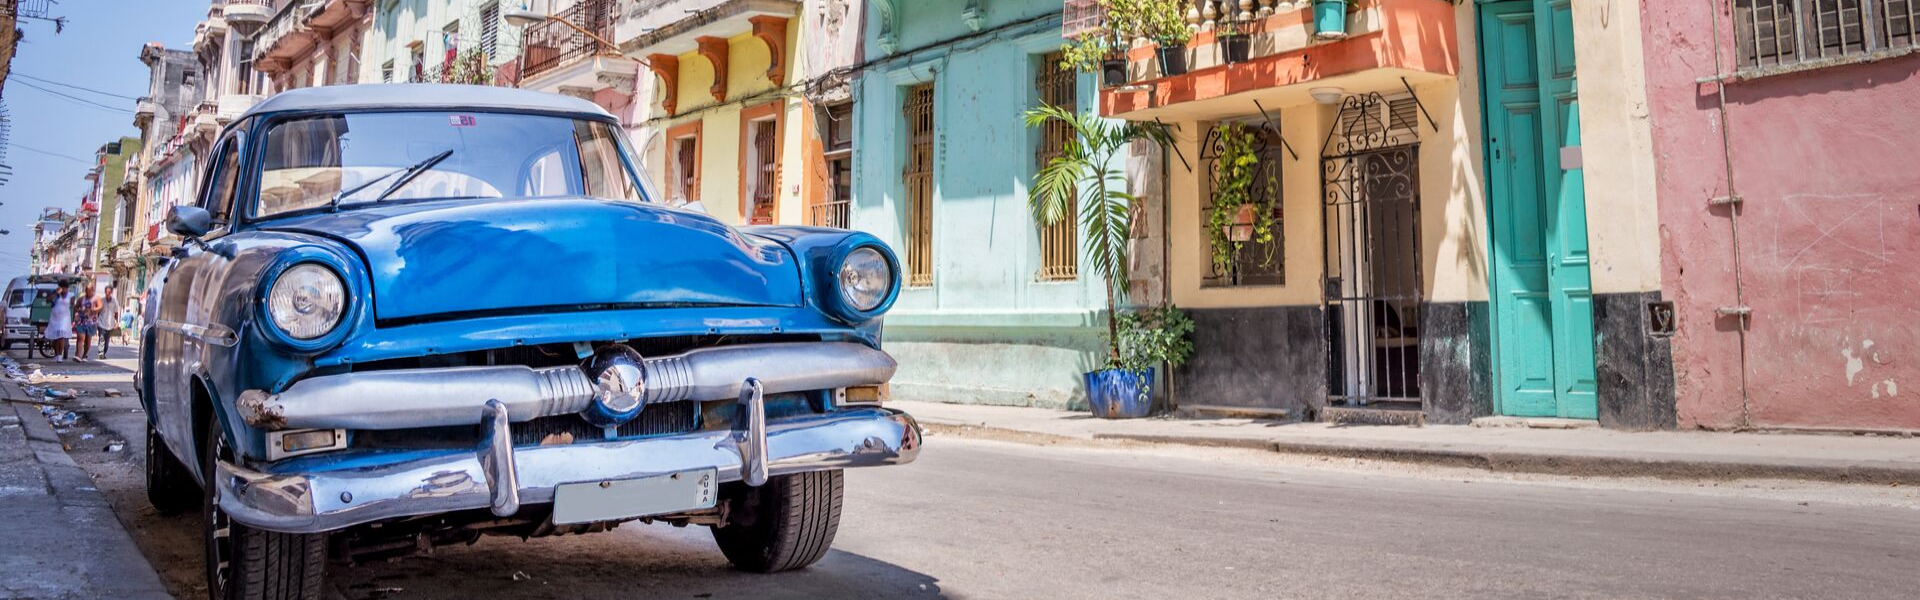 típico coche cubano